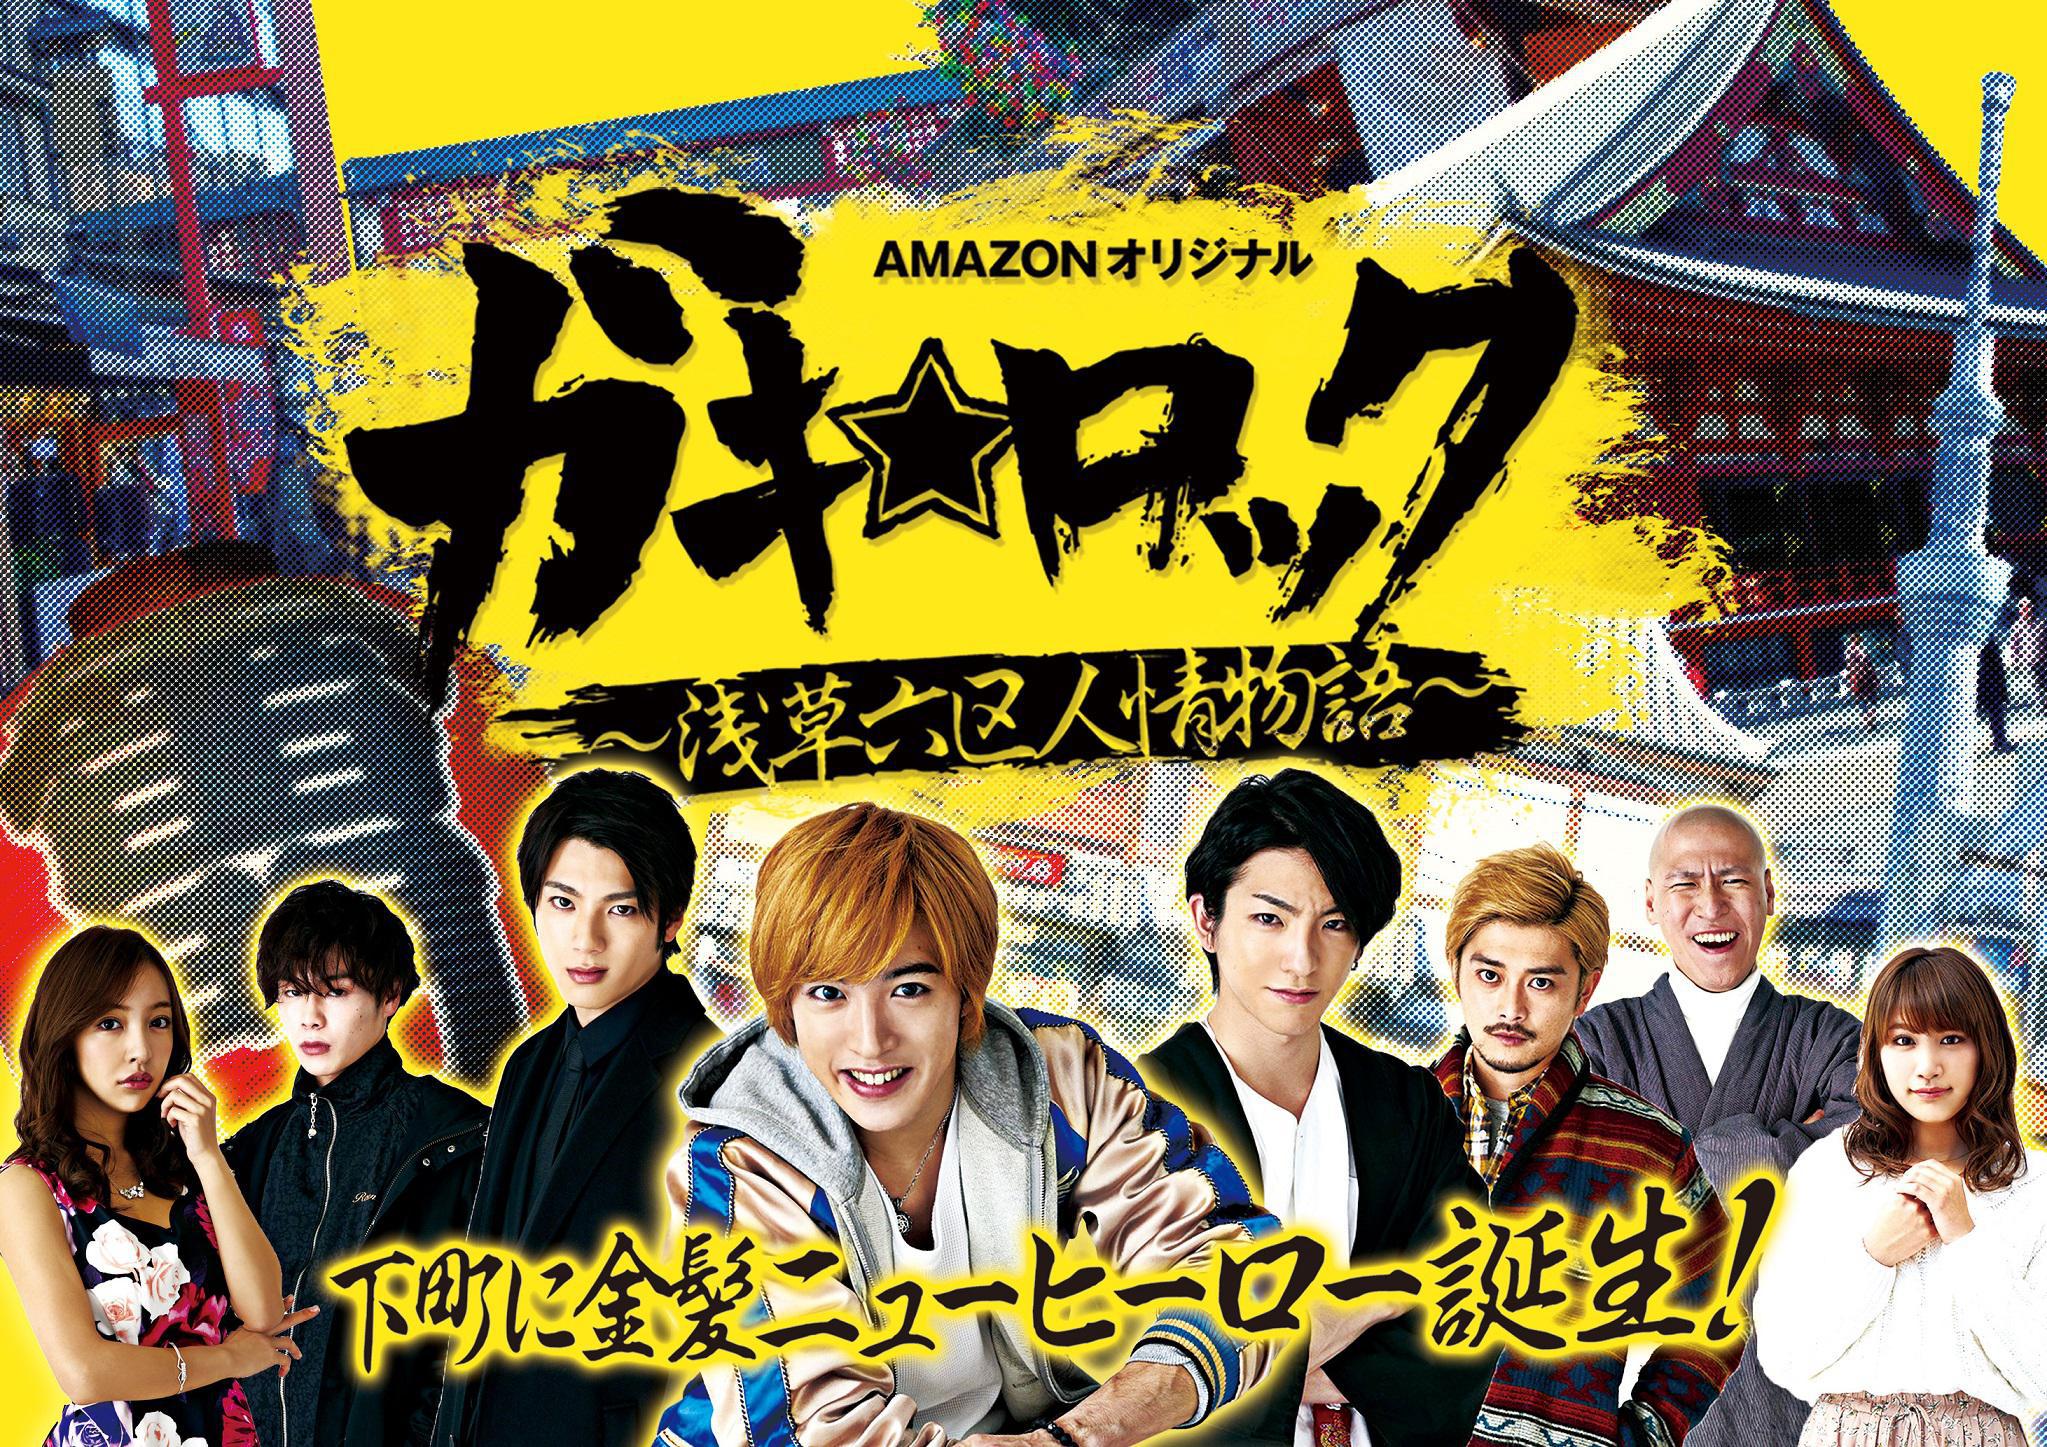 TV ratings for Gaki Rock: Asakusa Roku-ku Ninjo Monogatari in Brazil. Amazon Prime Video TV series